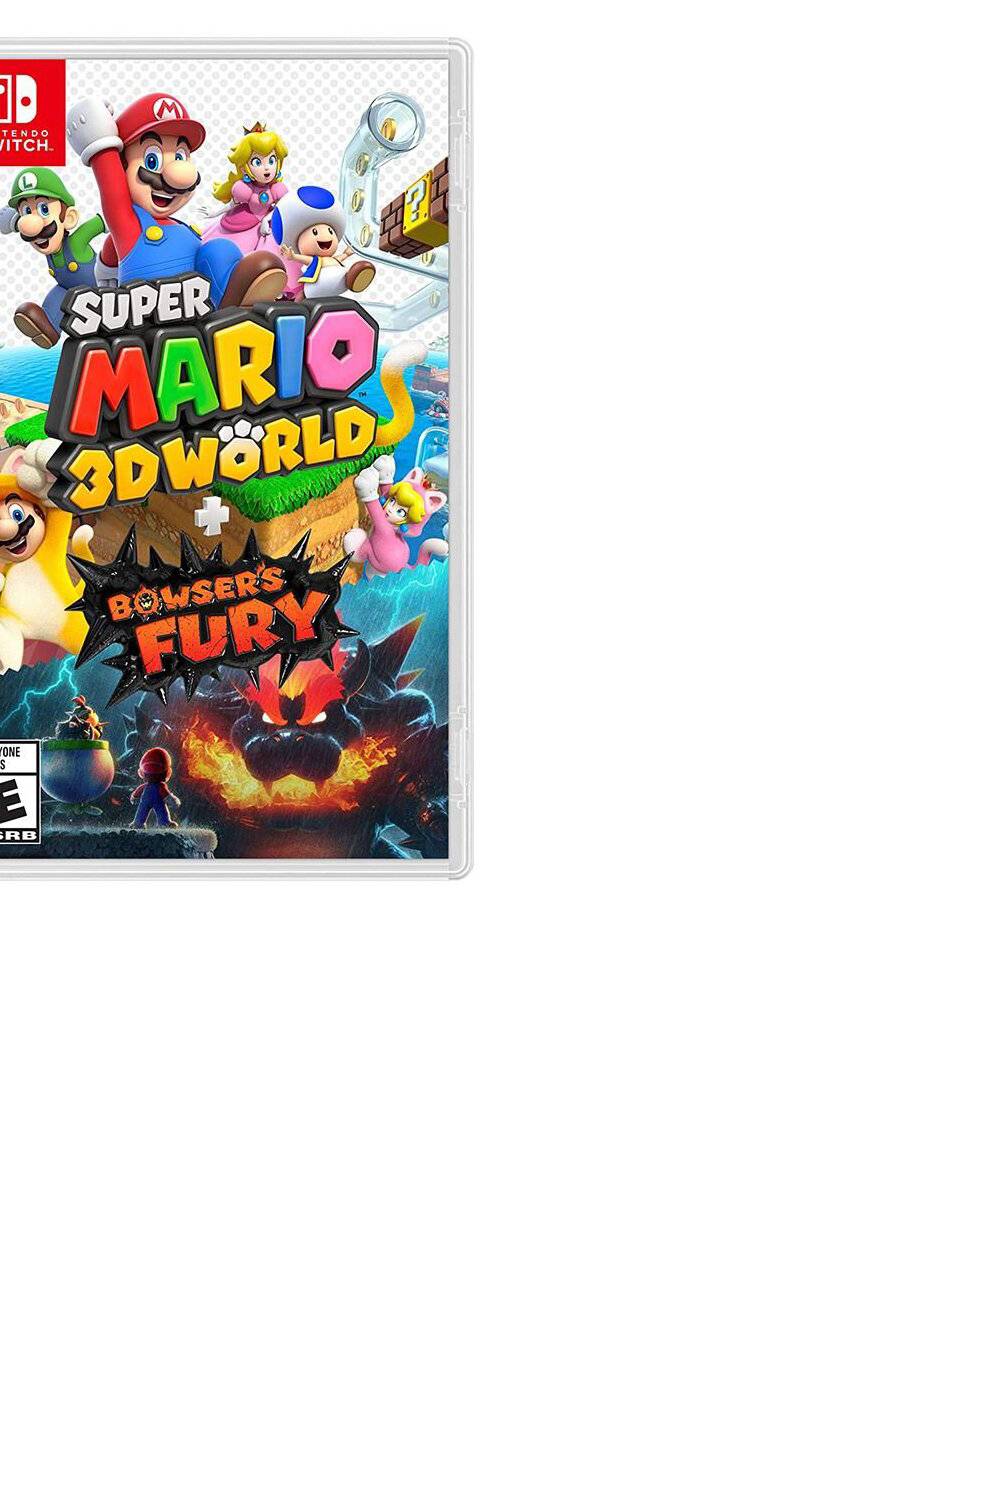 NINTENDO - Super Mario 3D World  Bowsers Fury - N Switch